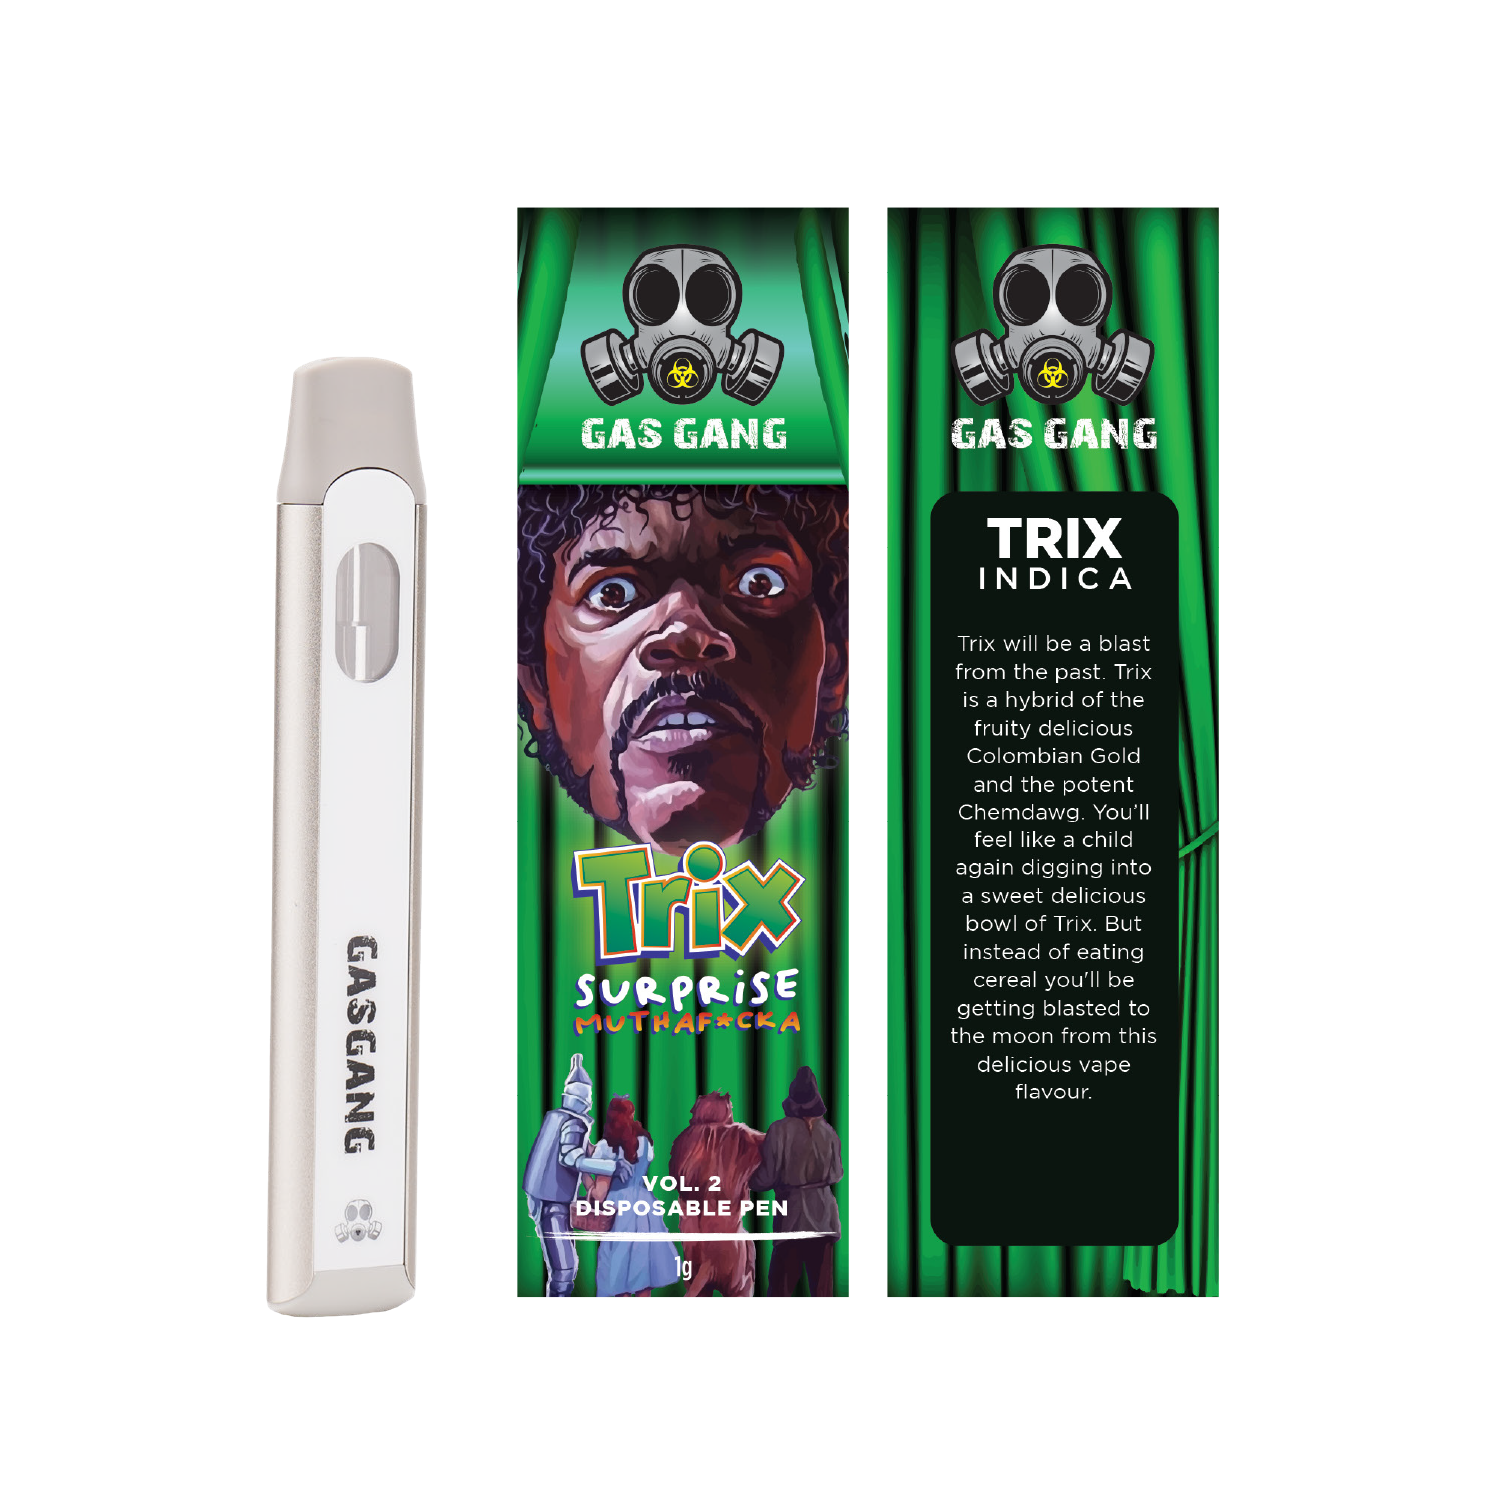 Buy Gas Gang - Trix Disposable Pen at BudExpressNOW Online Shop.